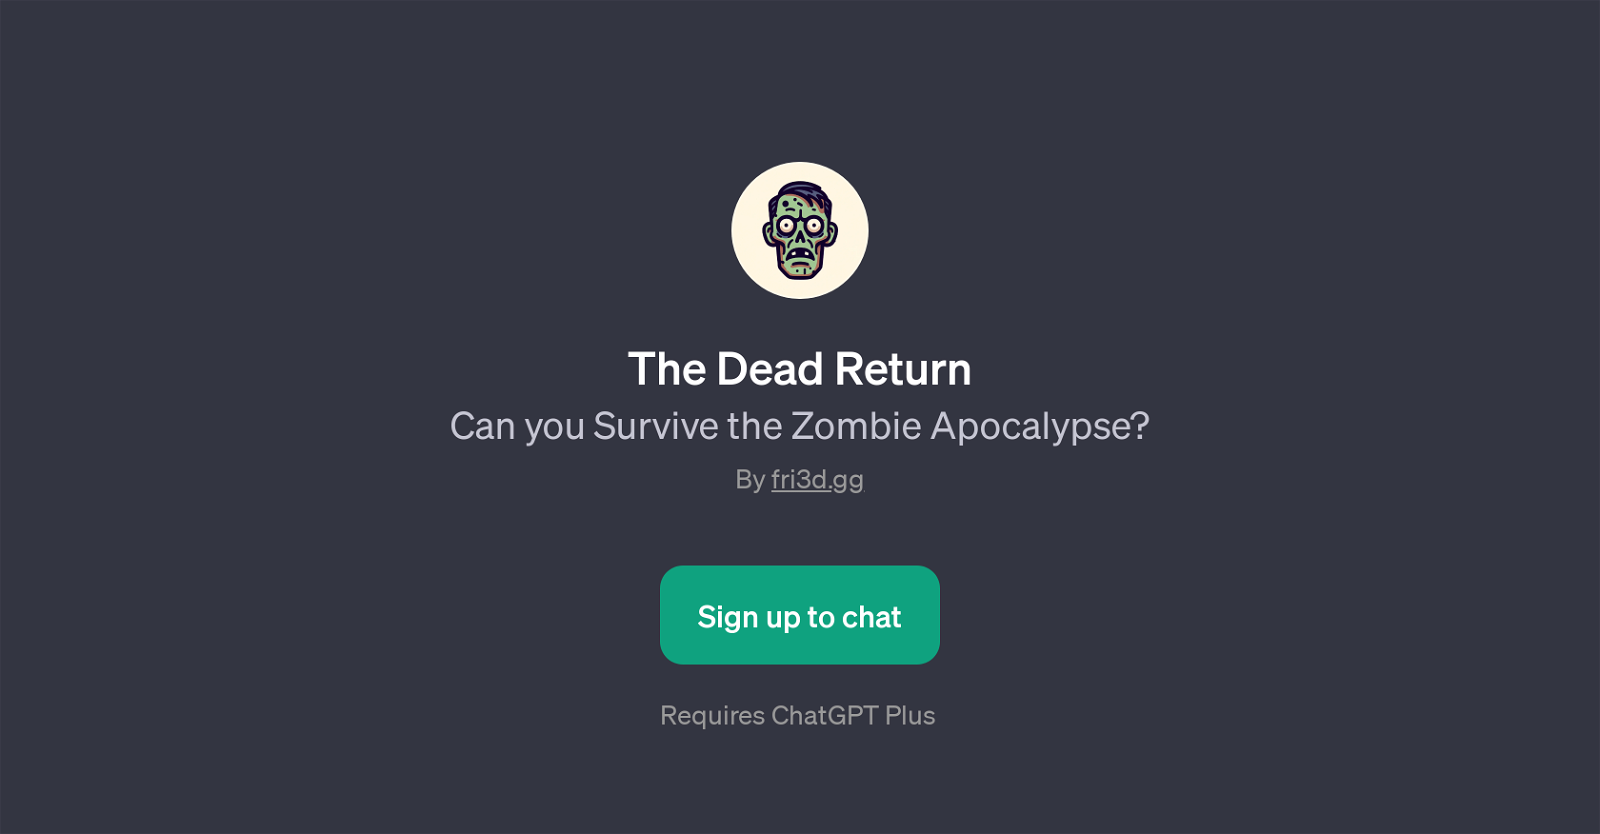 The Dead Return website